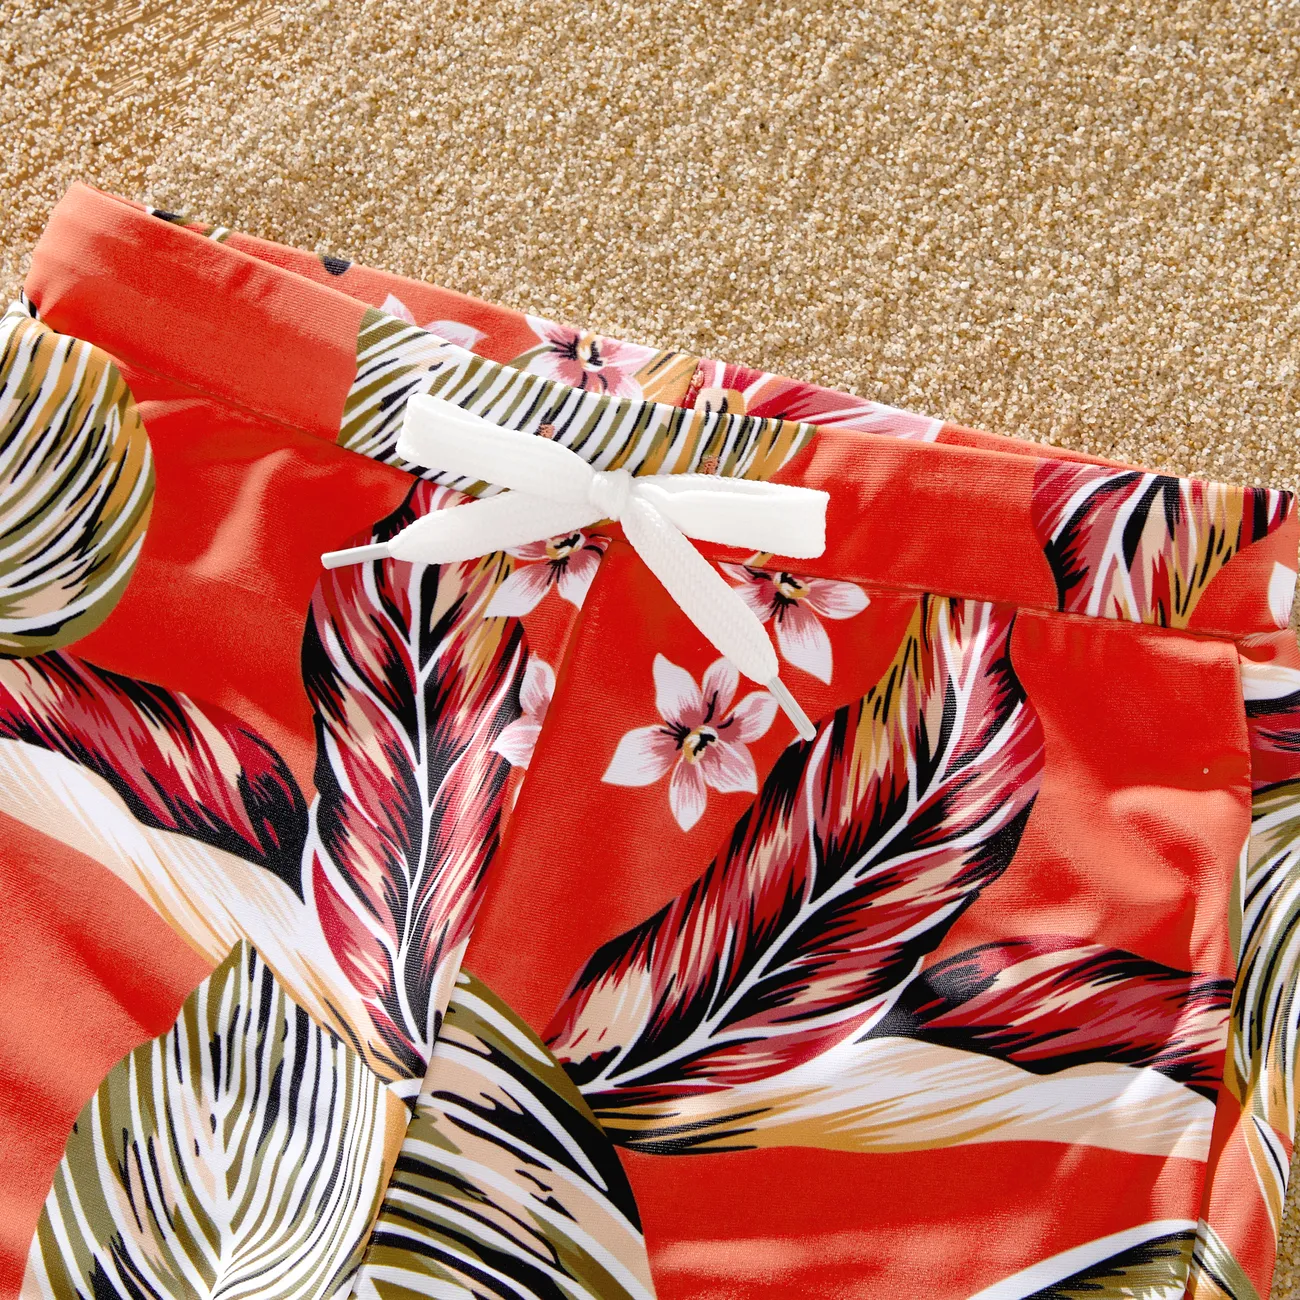 Family Matching Drawstring Swim Trunks or Tropical Floral Ruffle V-Neck Swimsuit Orange color big image 1